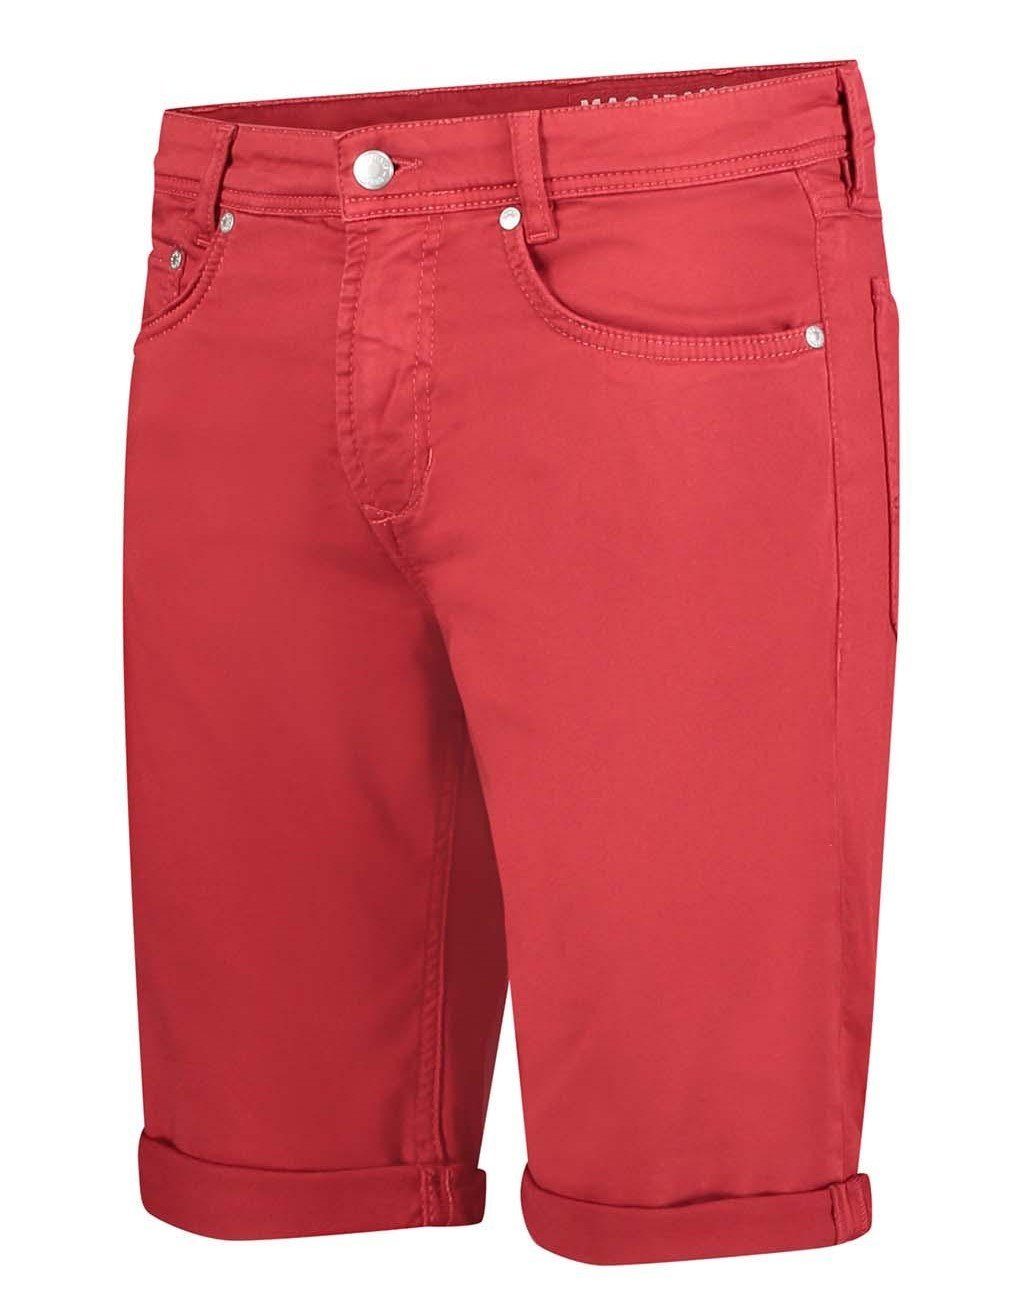 MAC 5-Pocket-Jeans MAC 0562-00-0994 berry JOG'N red ice 485W BERMUDA